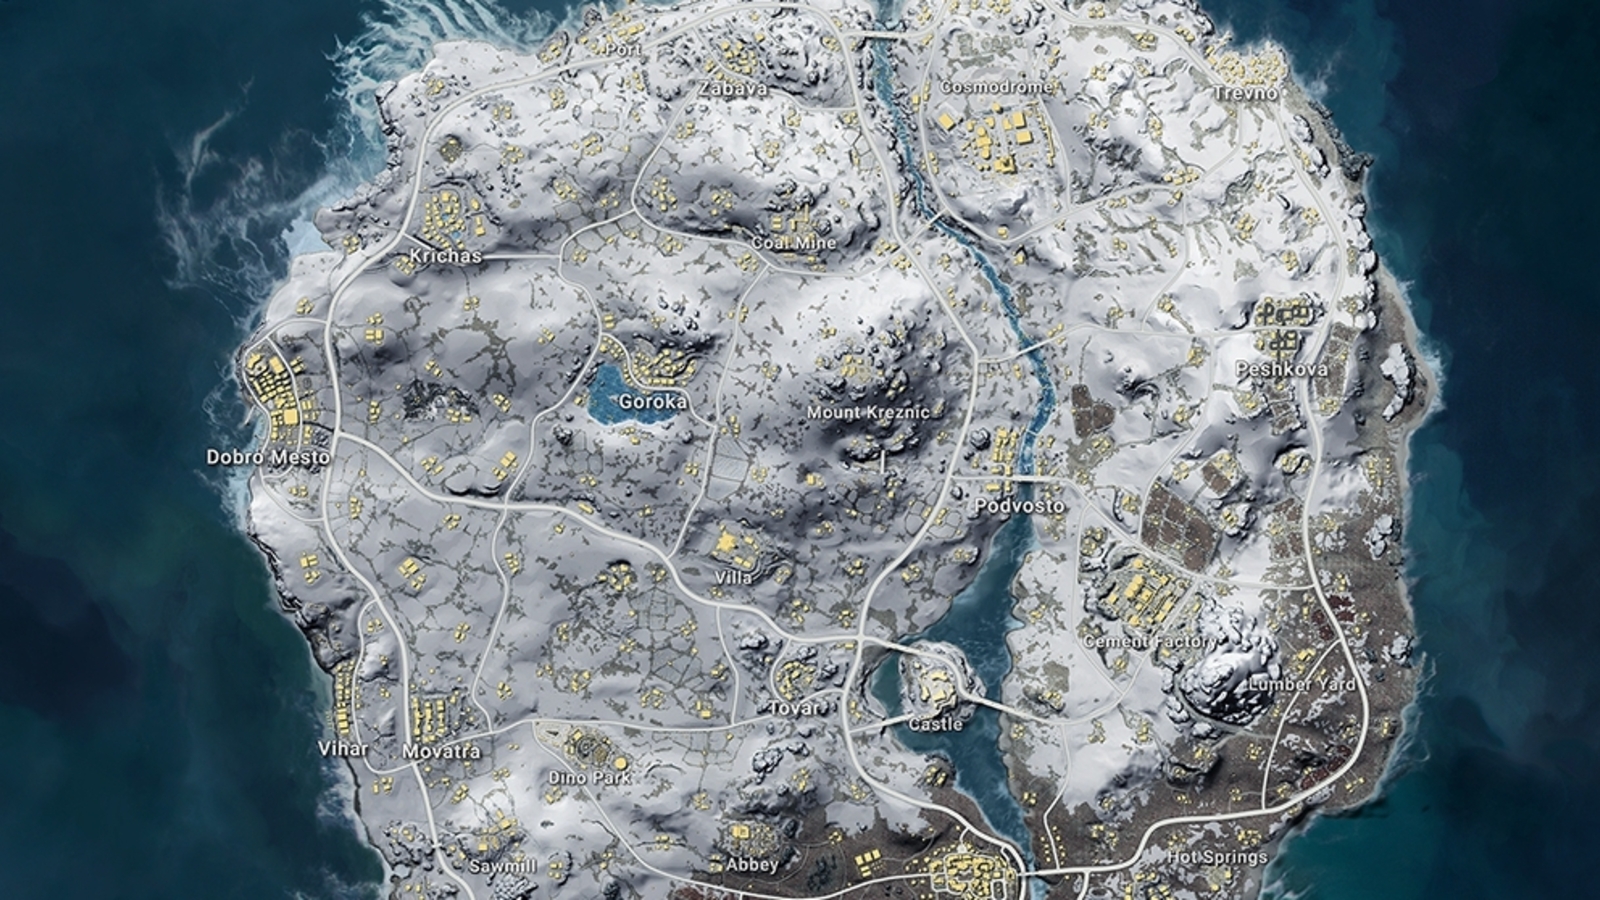 Pubg vikendi map vehicles size best start locations and snow map strategies